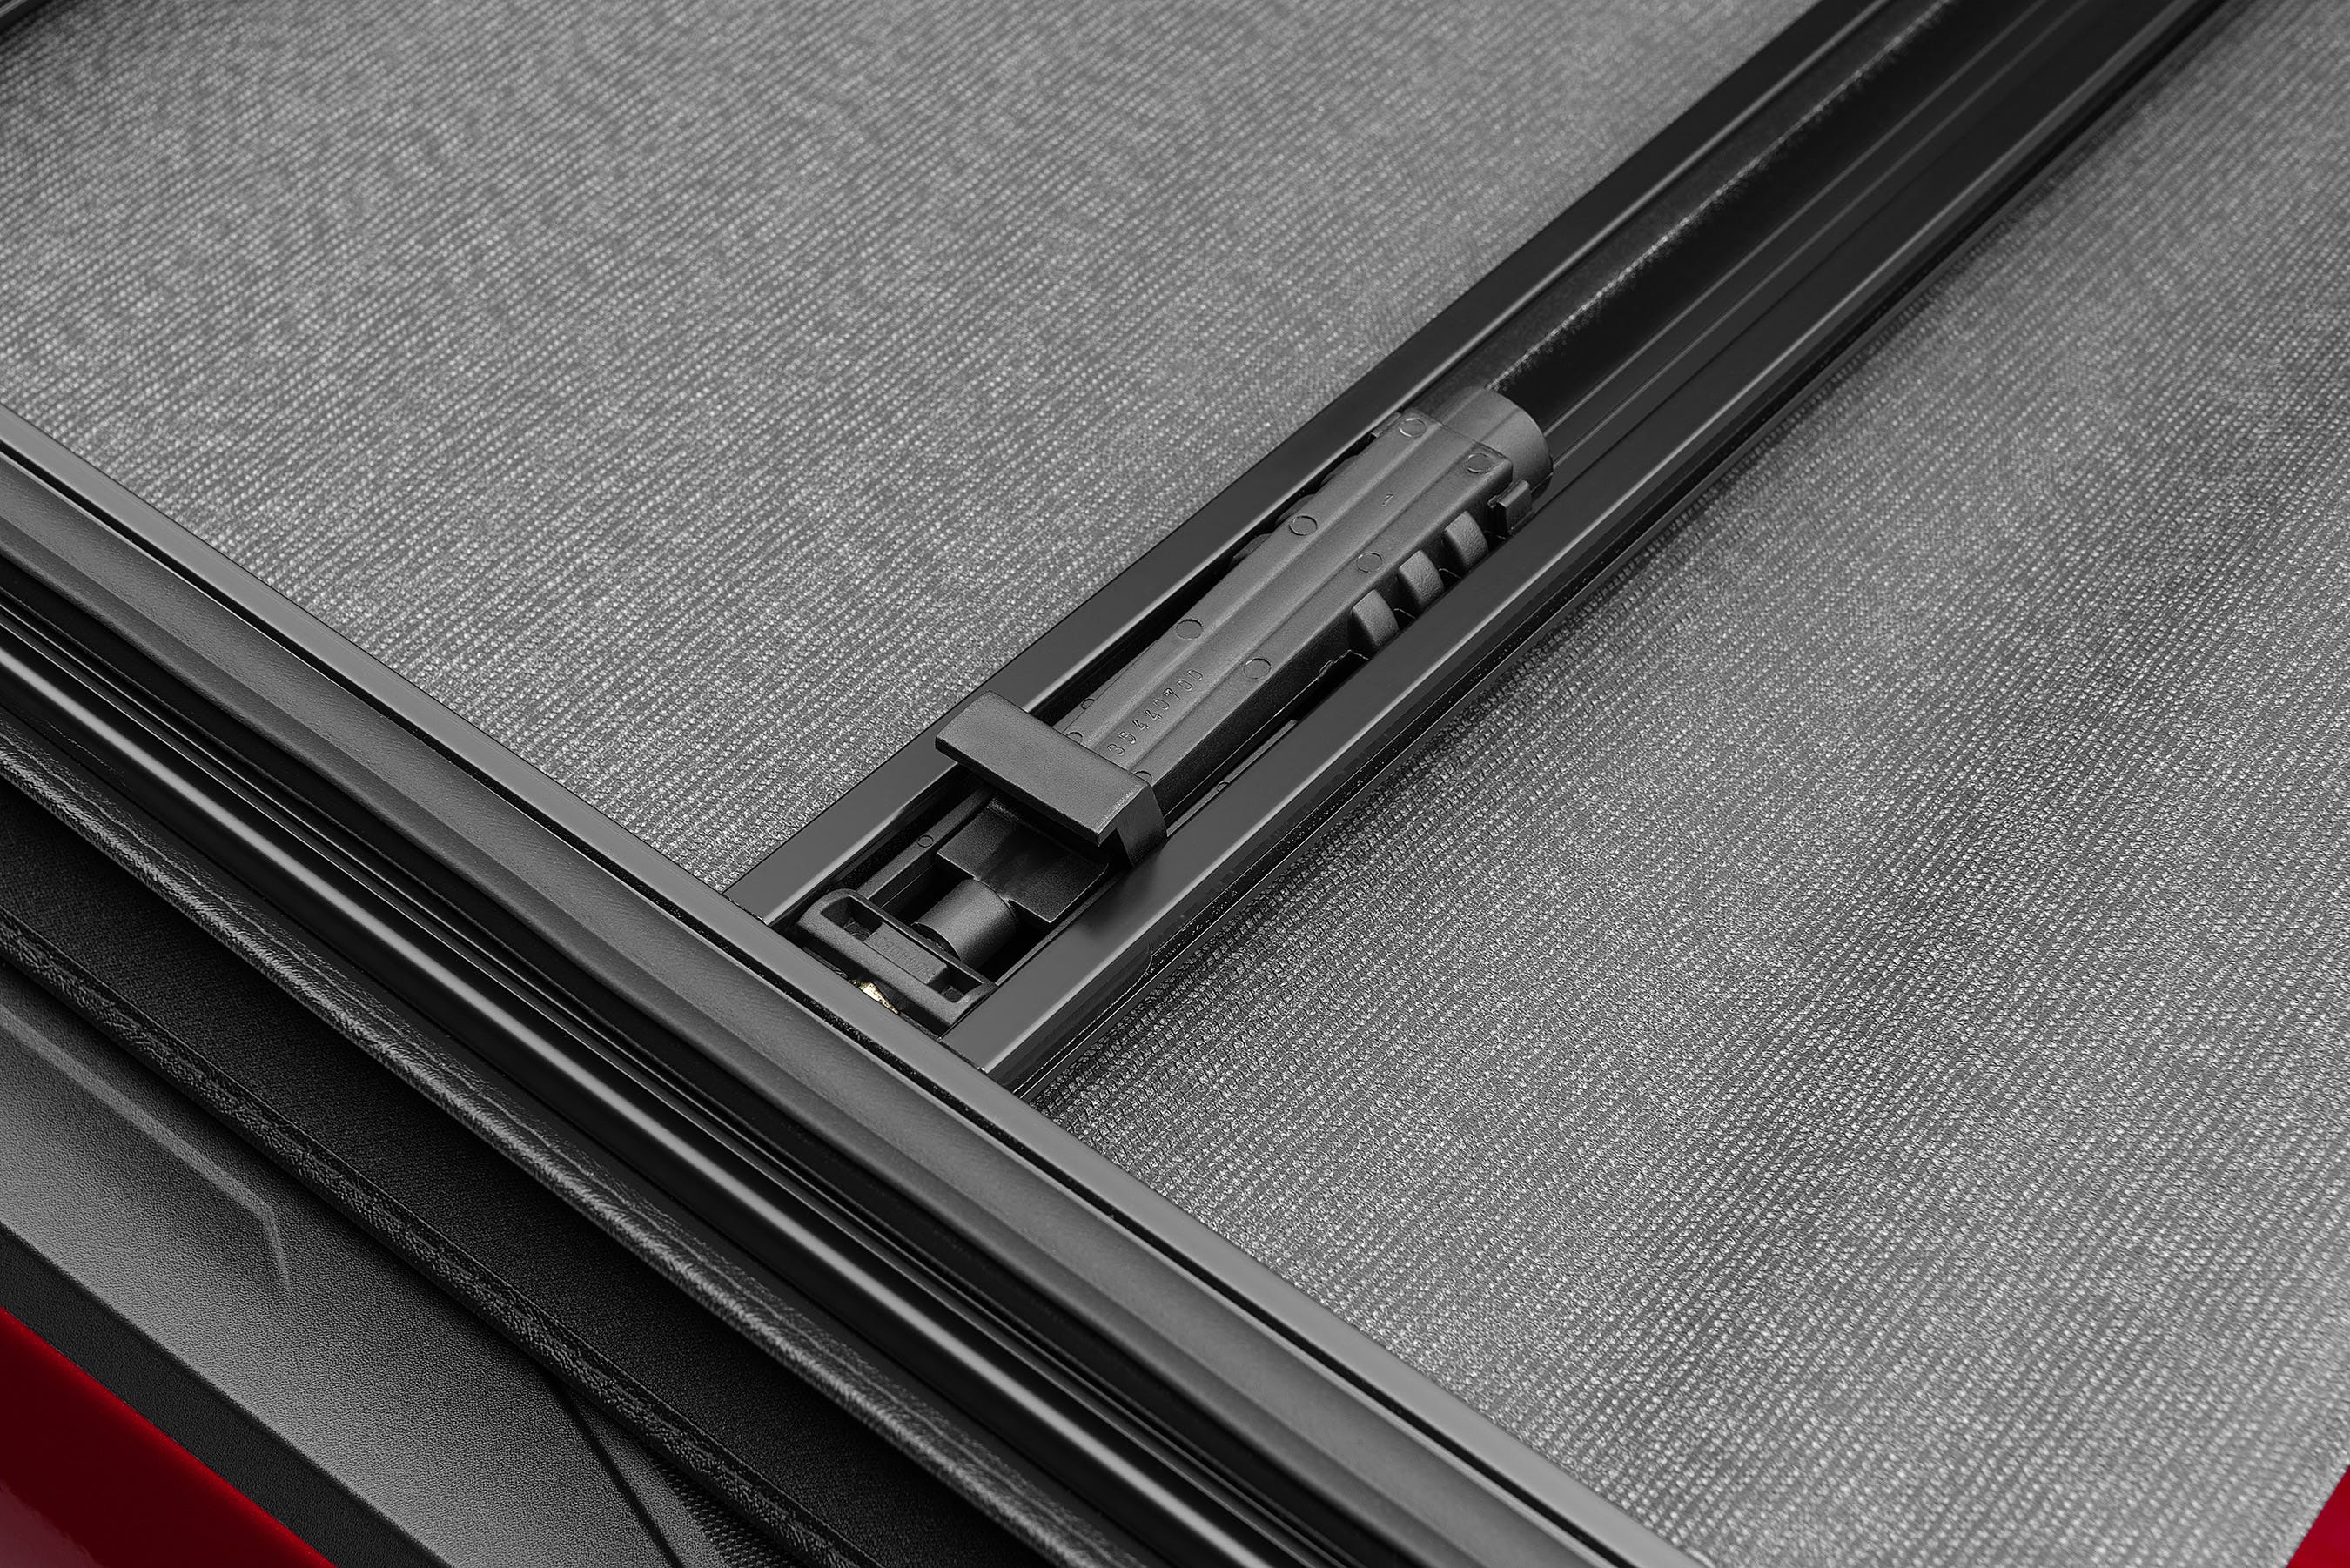 LUND 958292 Genesis Elite Tri-Fold Tonneau GENESIS ELITE TRI-FOLD TONNEAU COVER